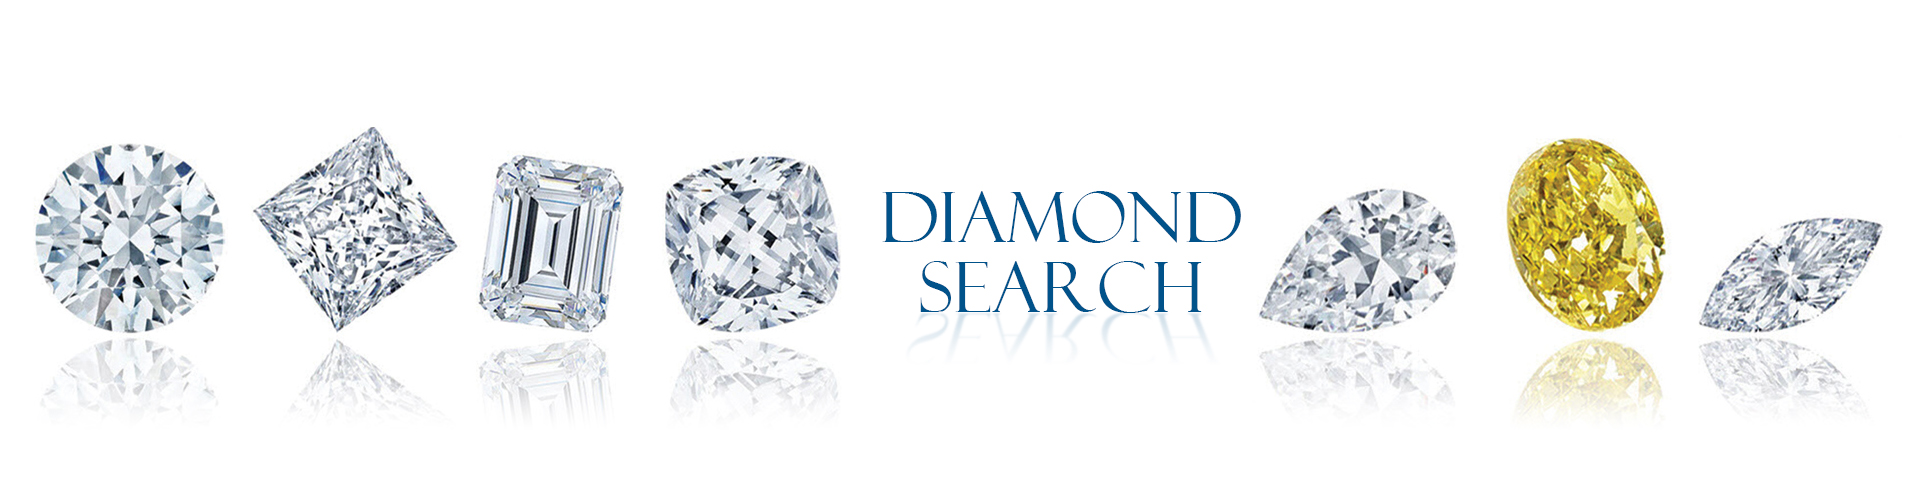 Diamond Search